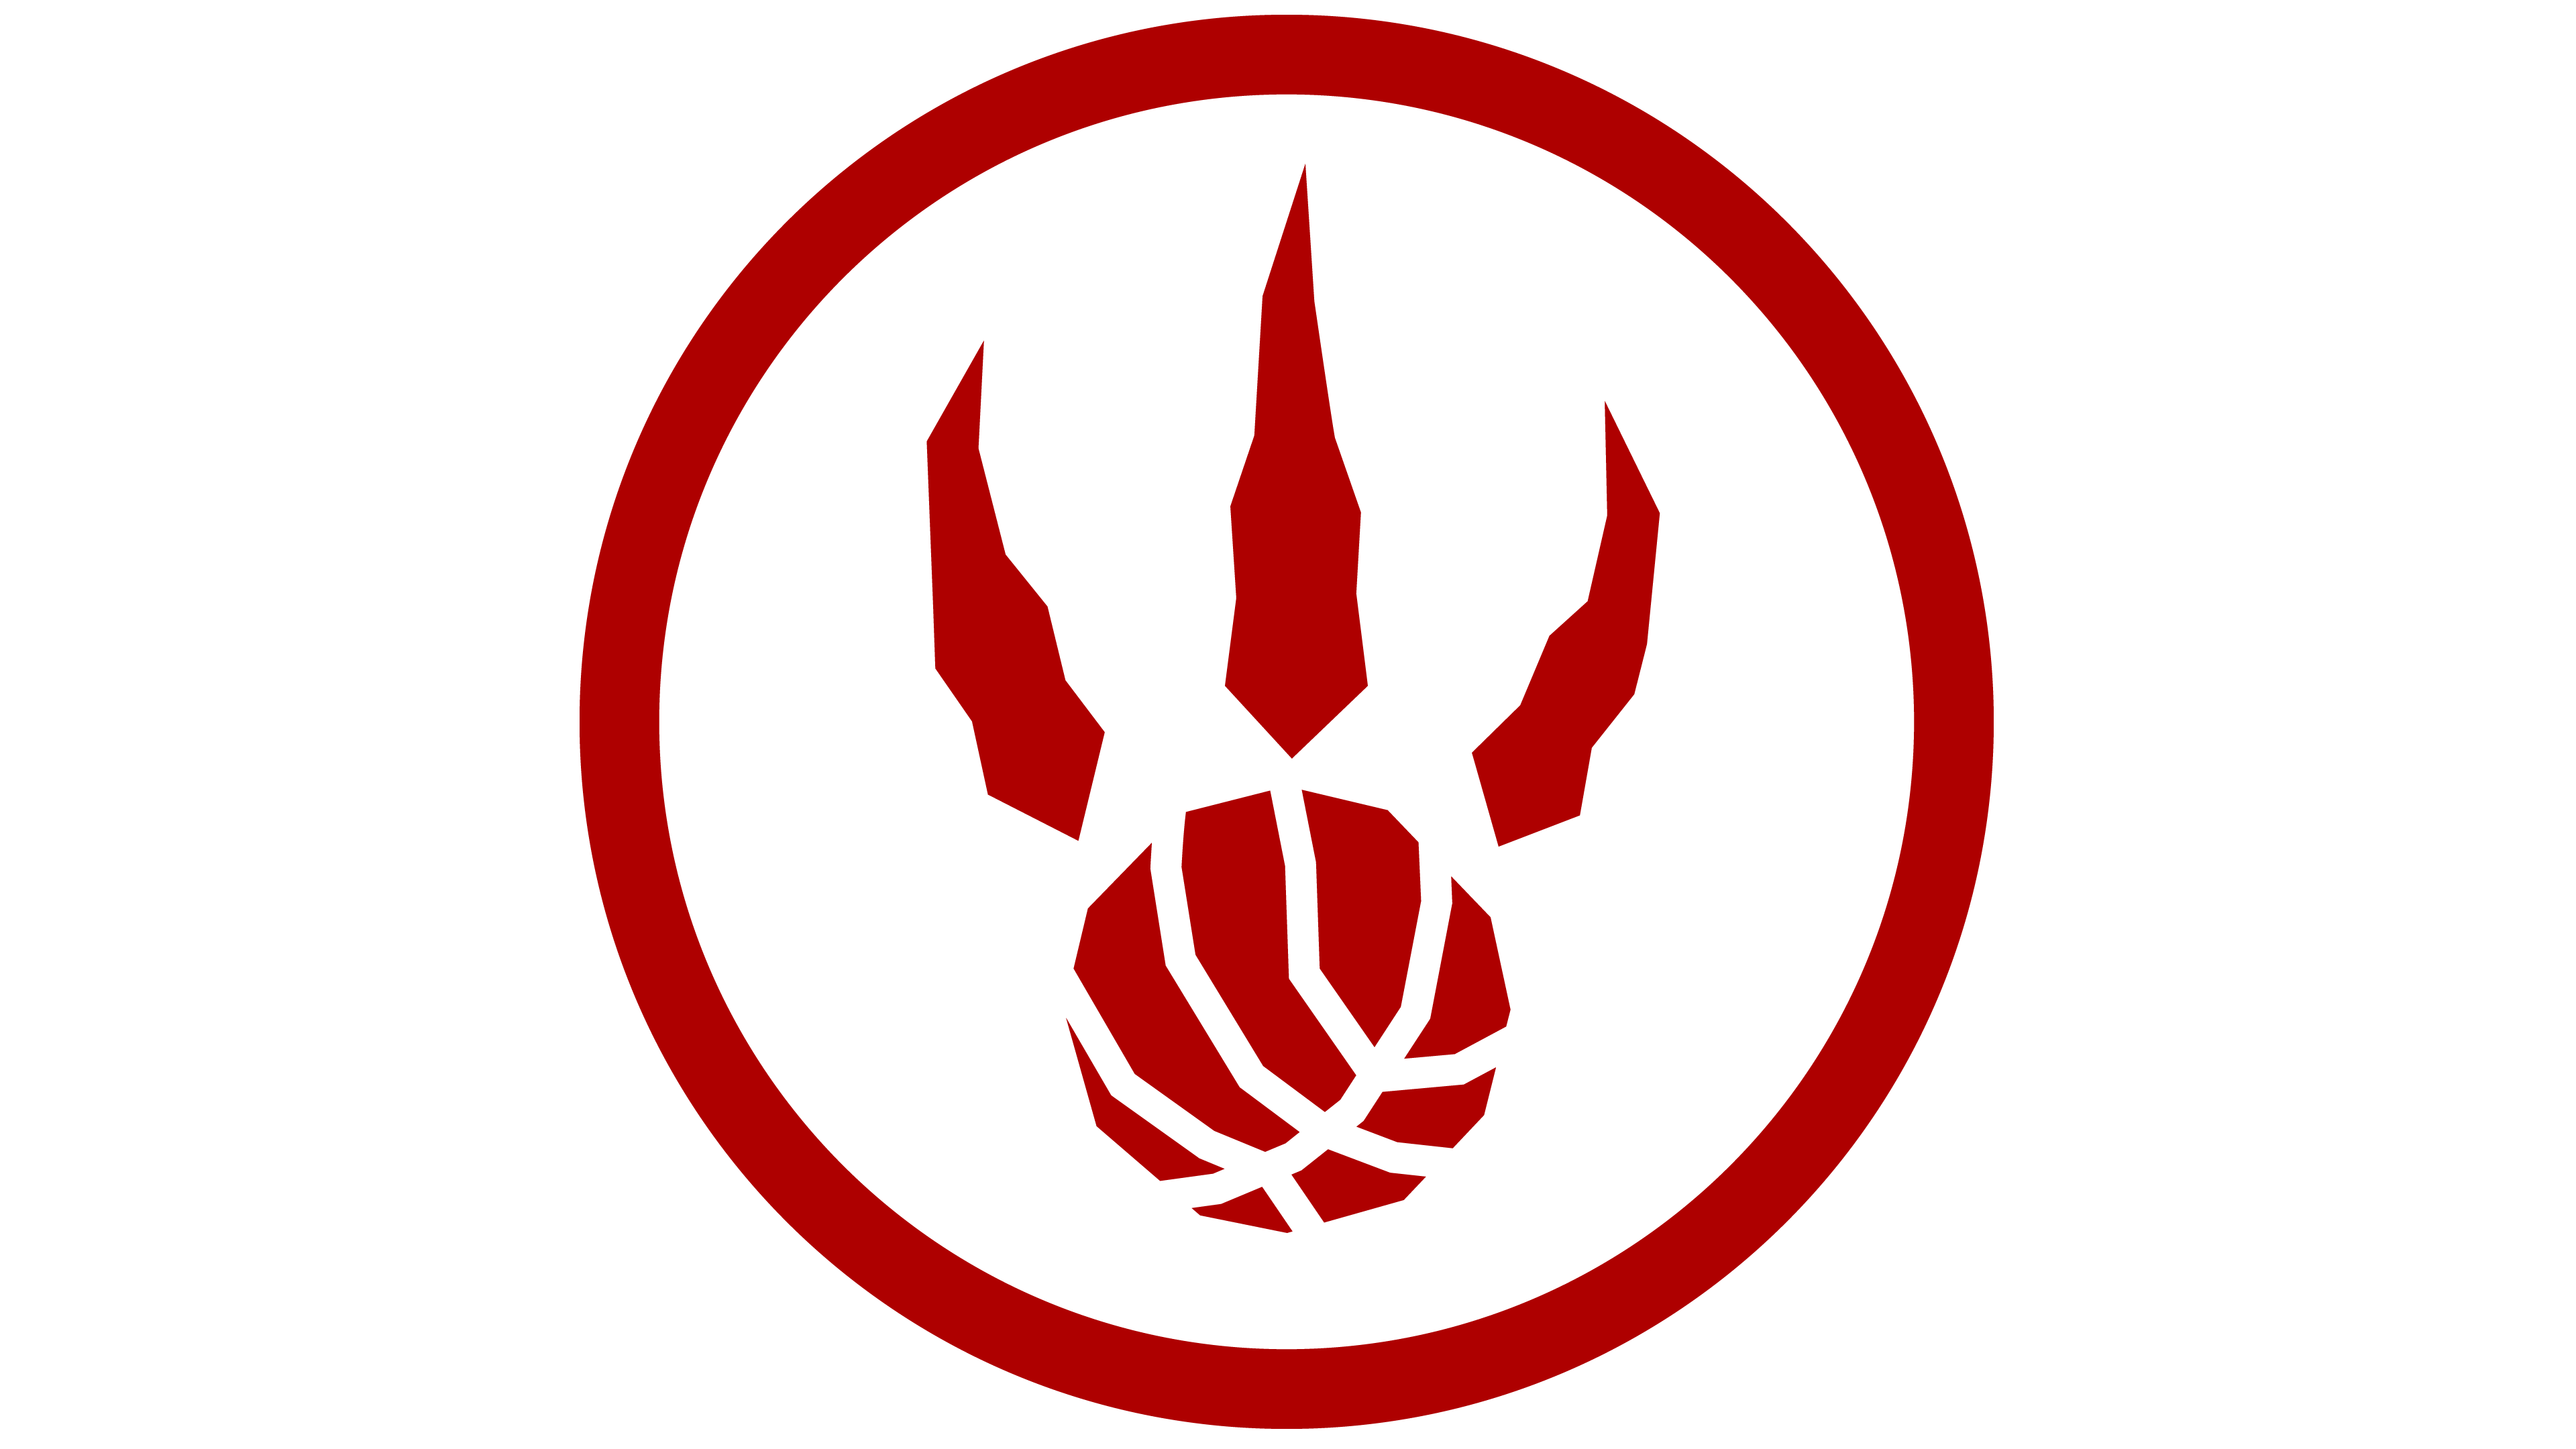 Raptors Basketball Logo - Toronto Raptors logo - Interesting History of the Team Name and emblem